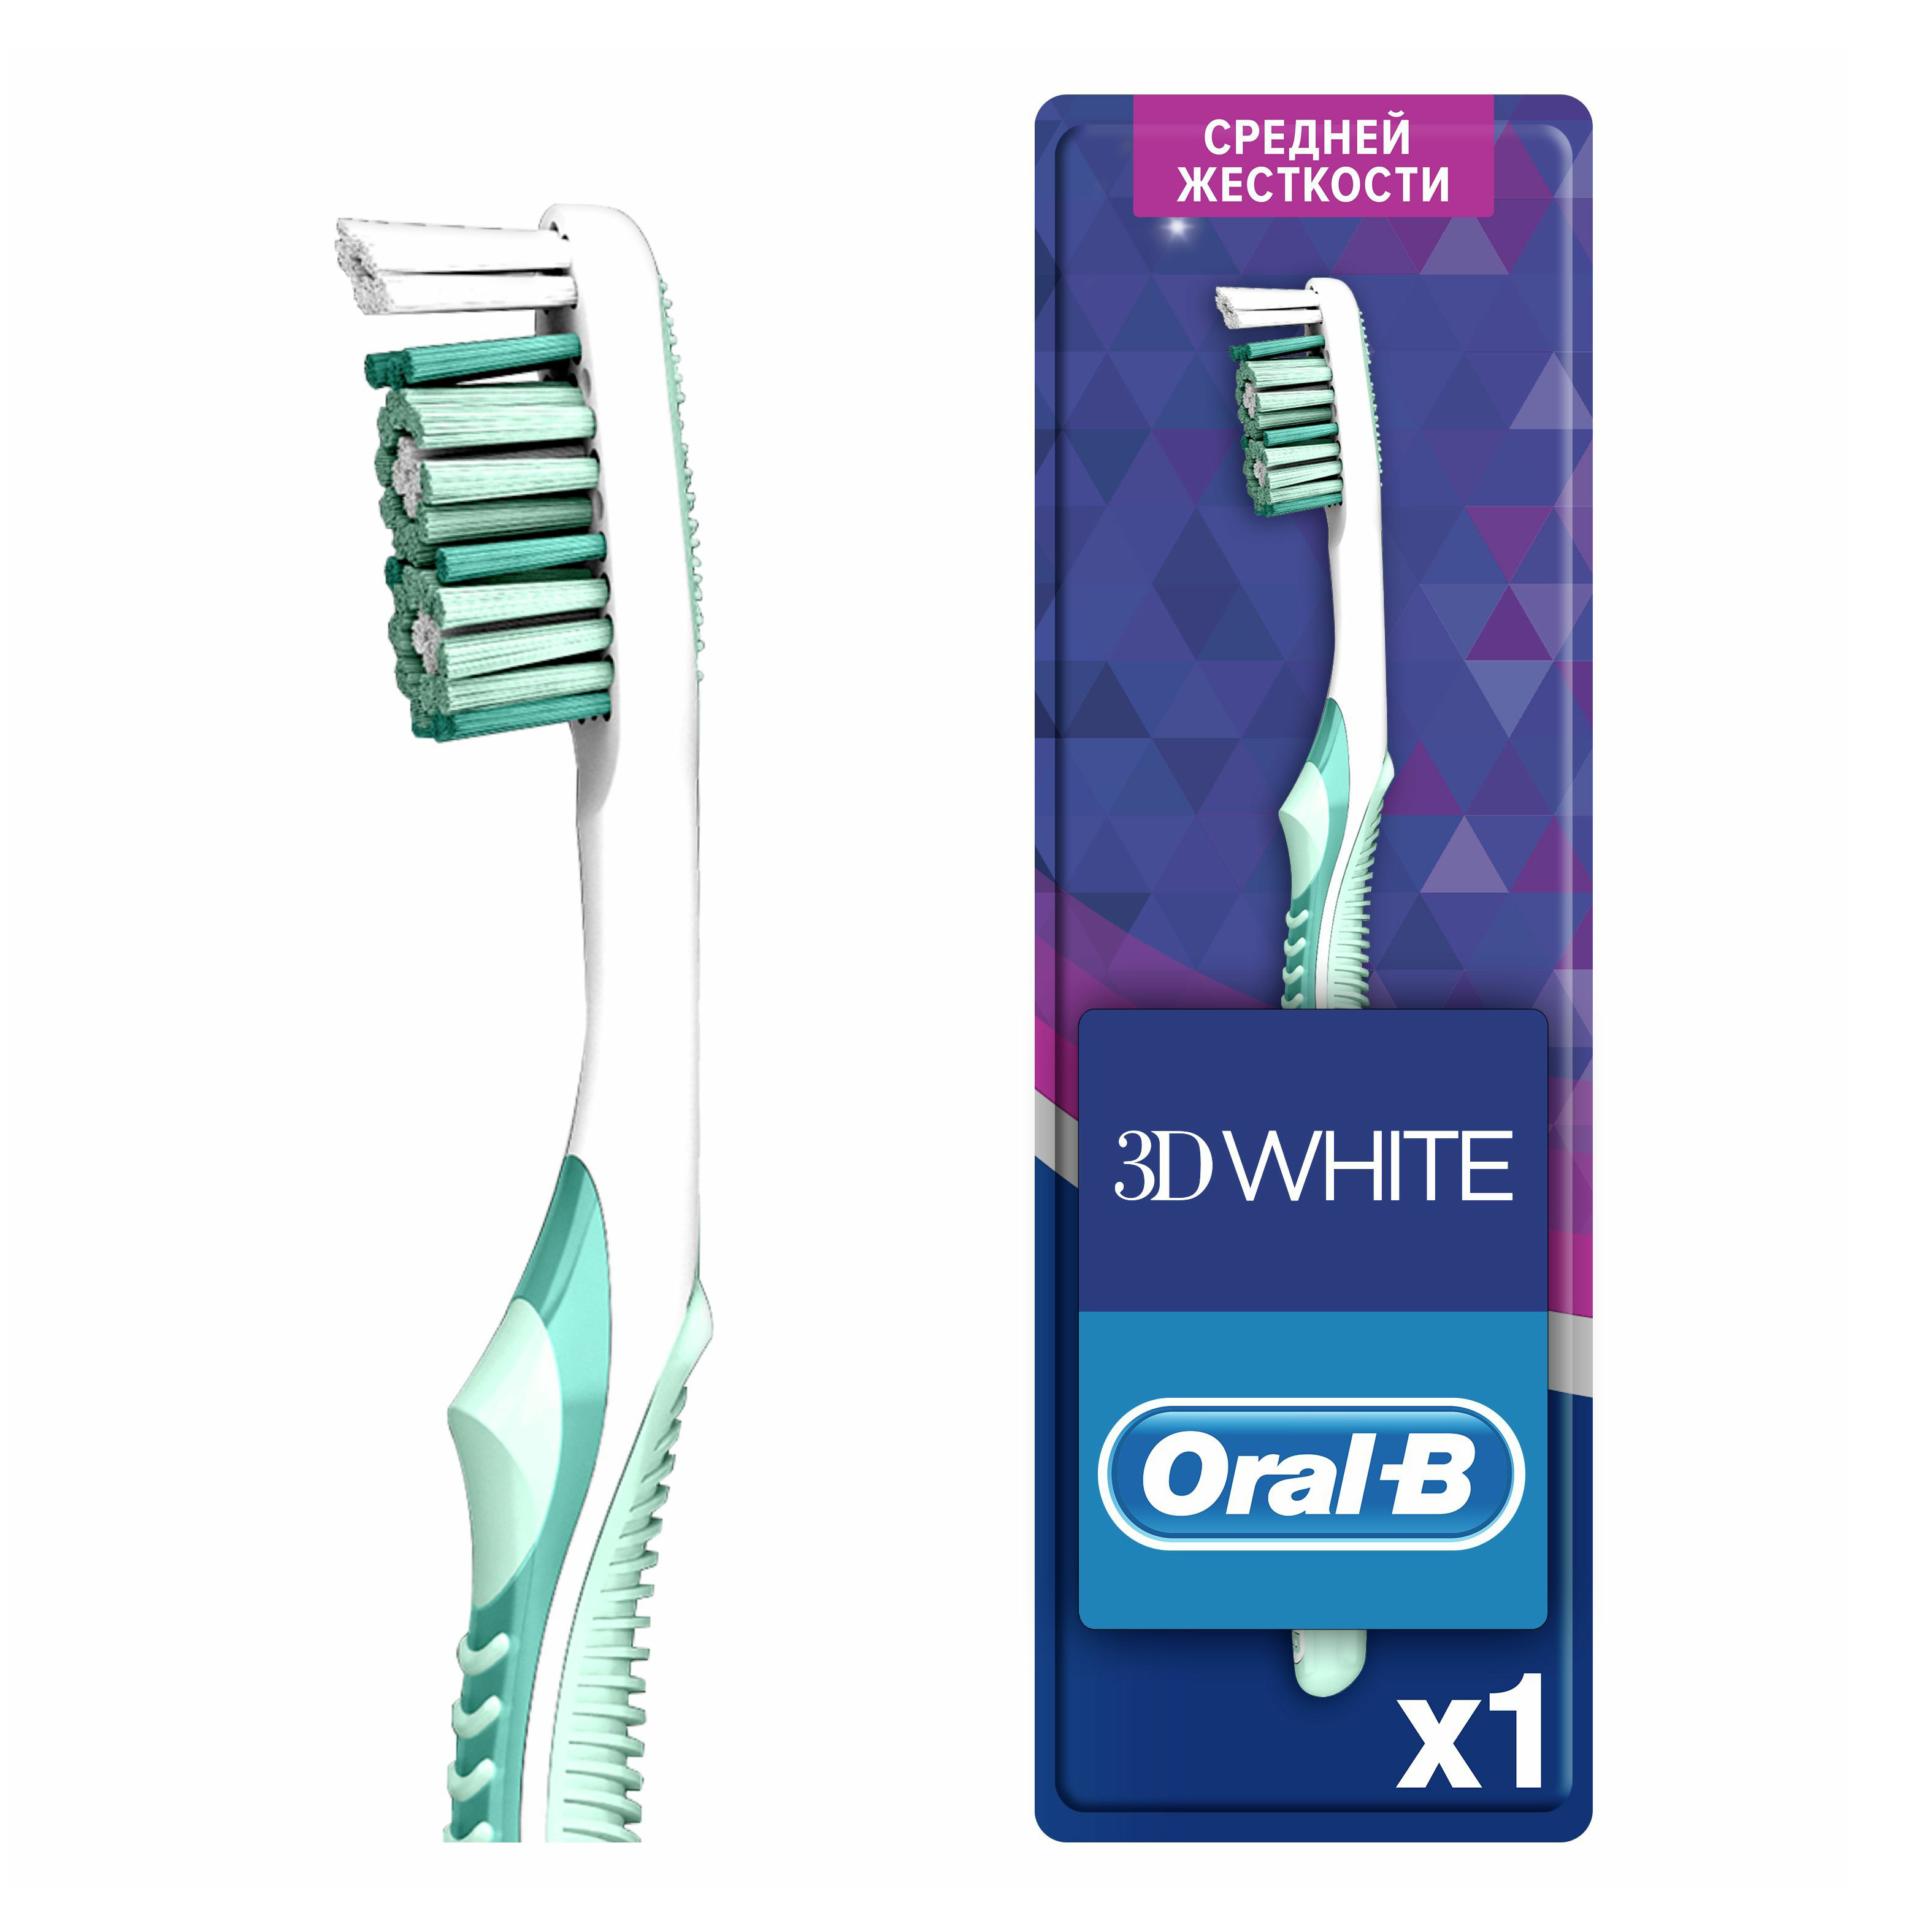 Зубная щетка Oral-B 3D White Whitening средней жесткости oral b про 3 щетка зубная электрическая 1 шт